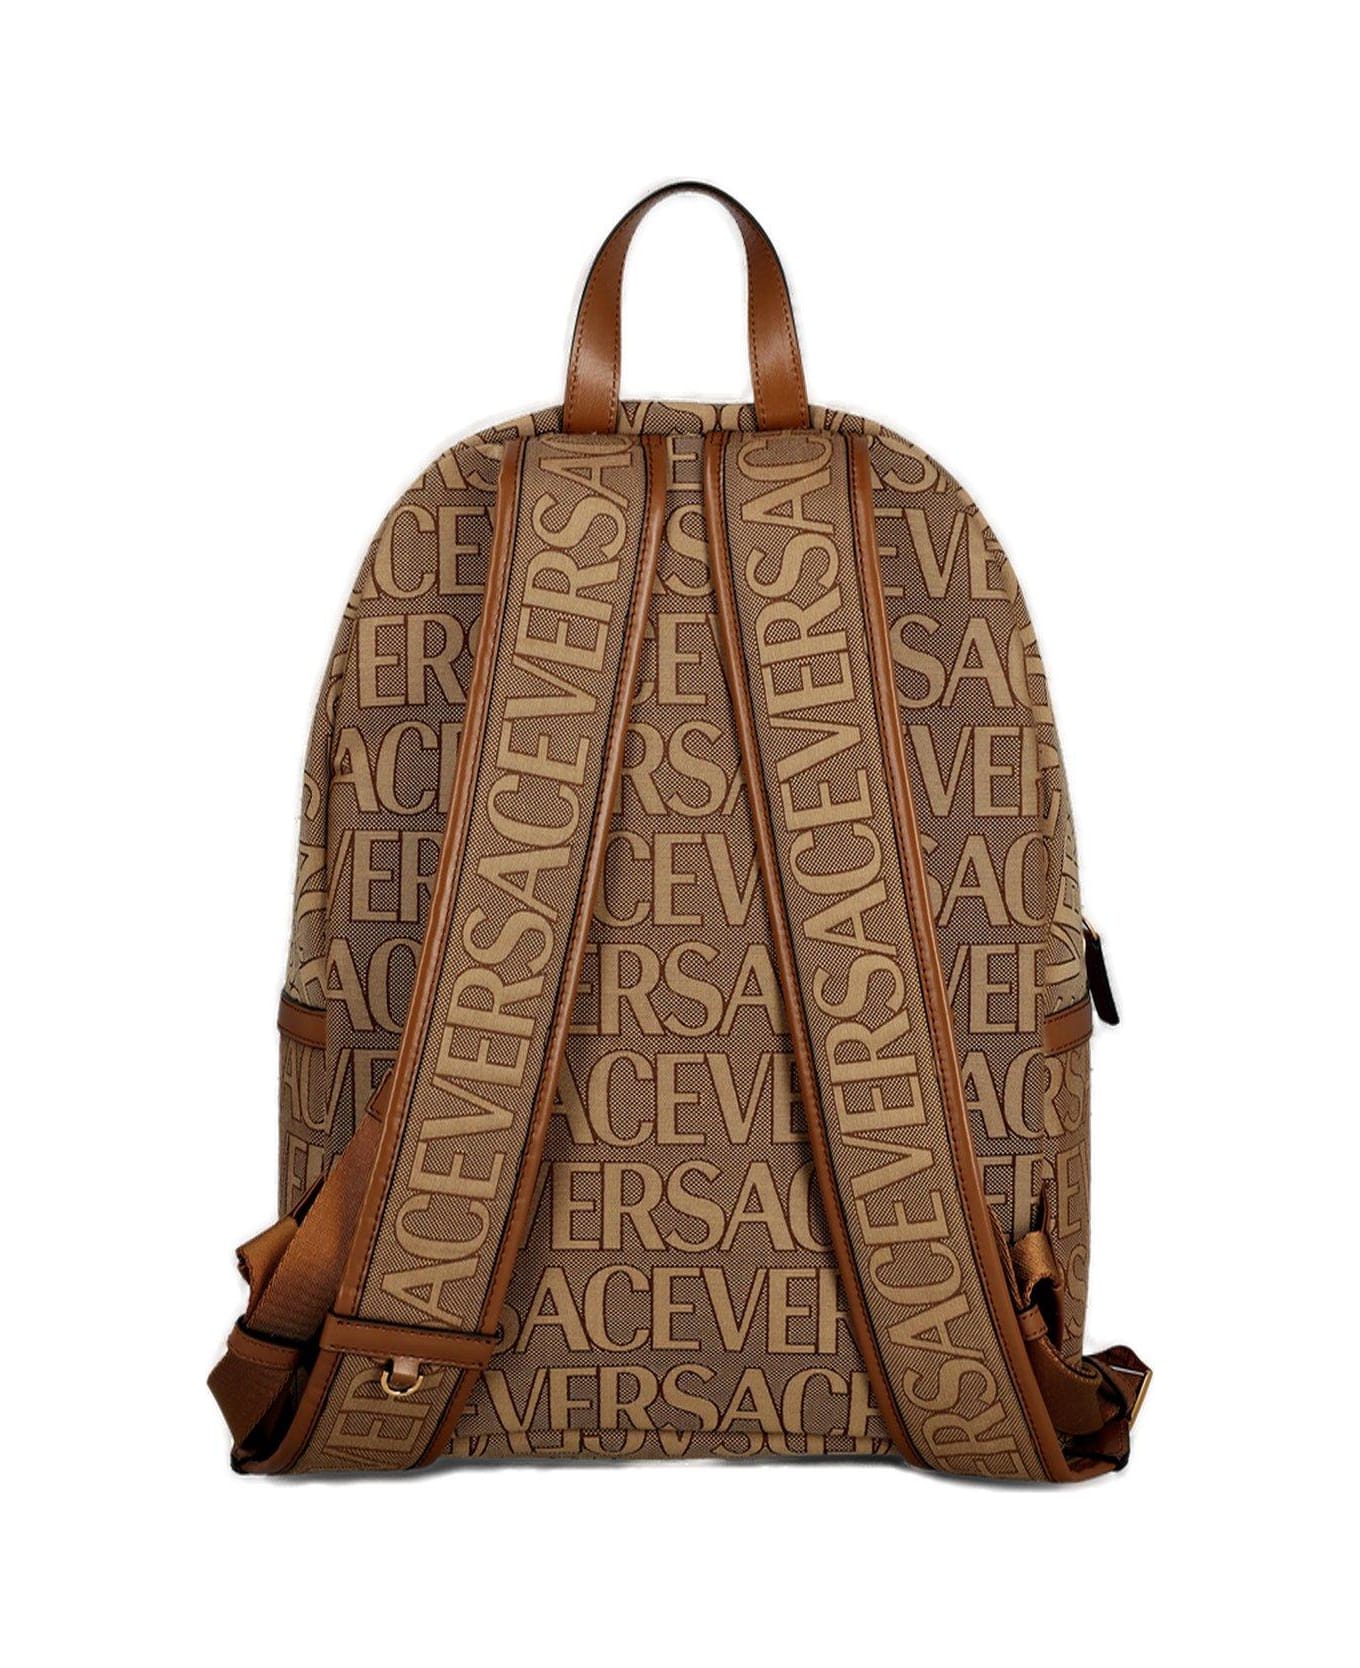 Versace Allover Backpack - BEIGE BROWN